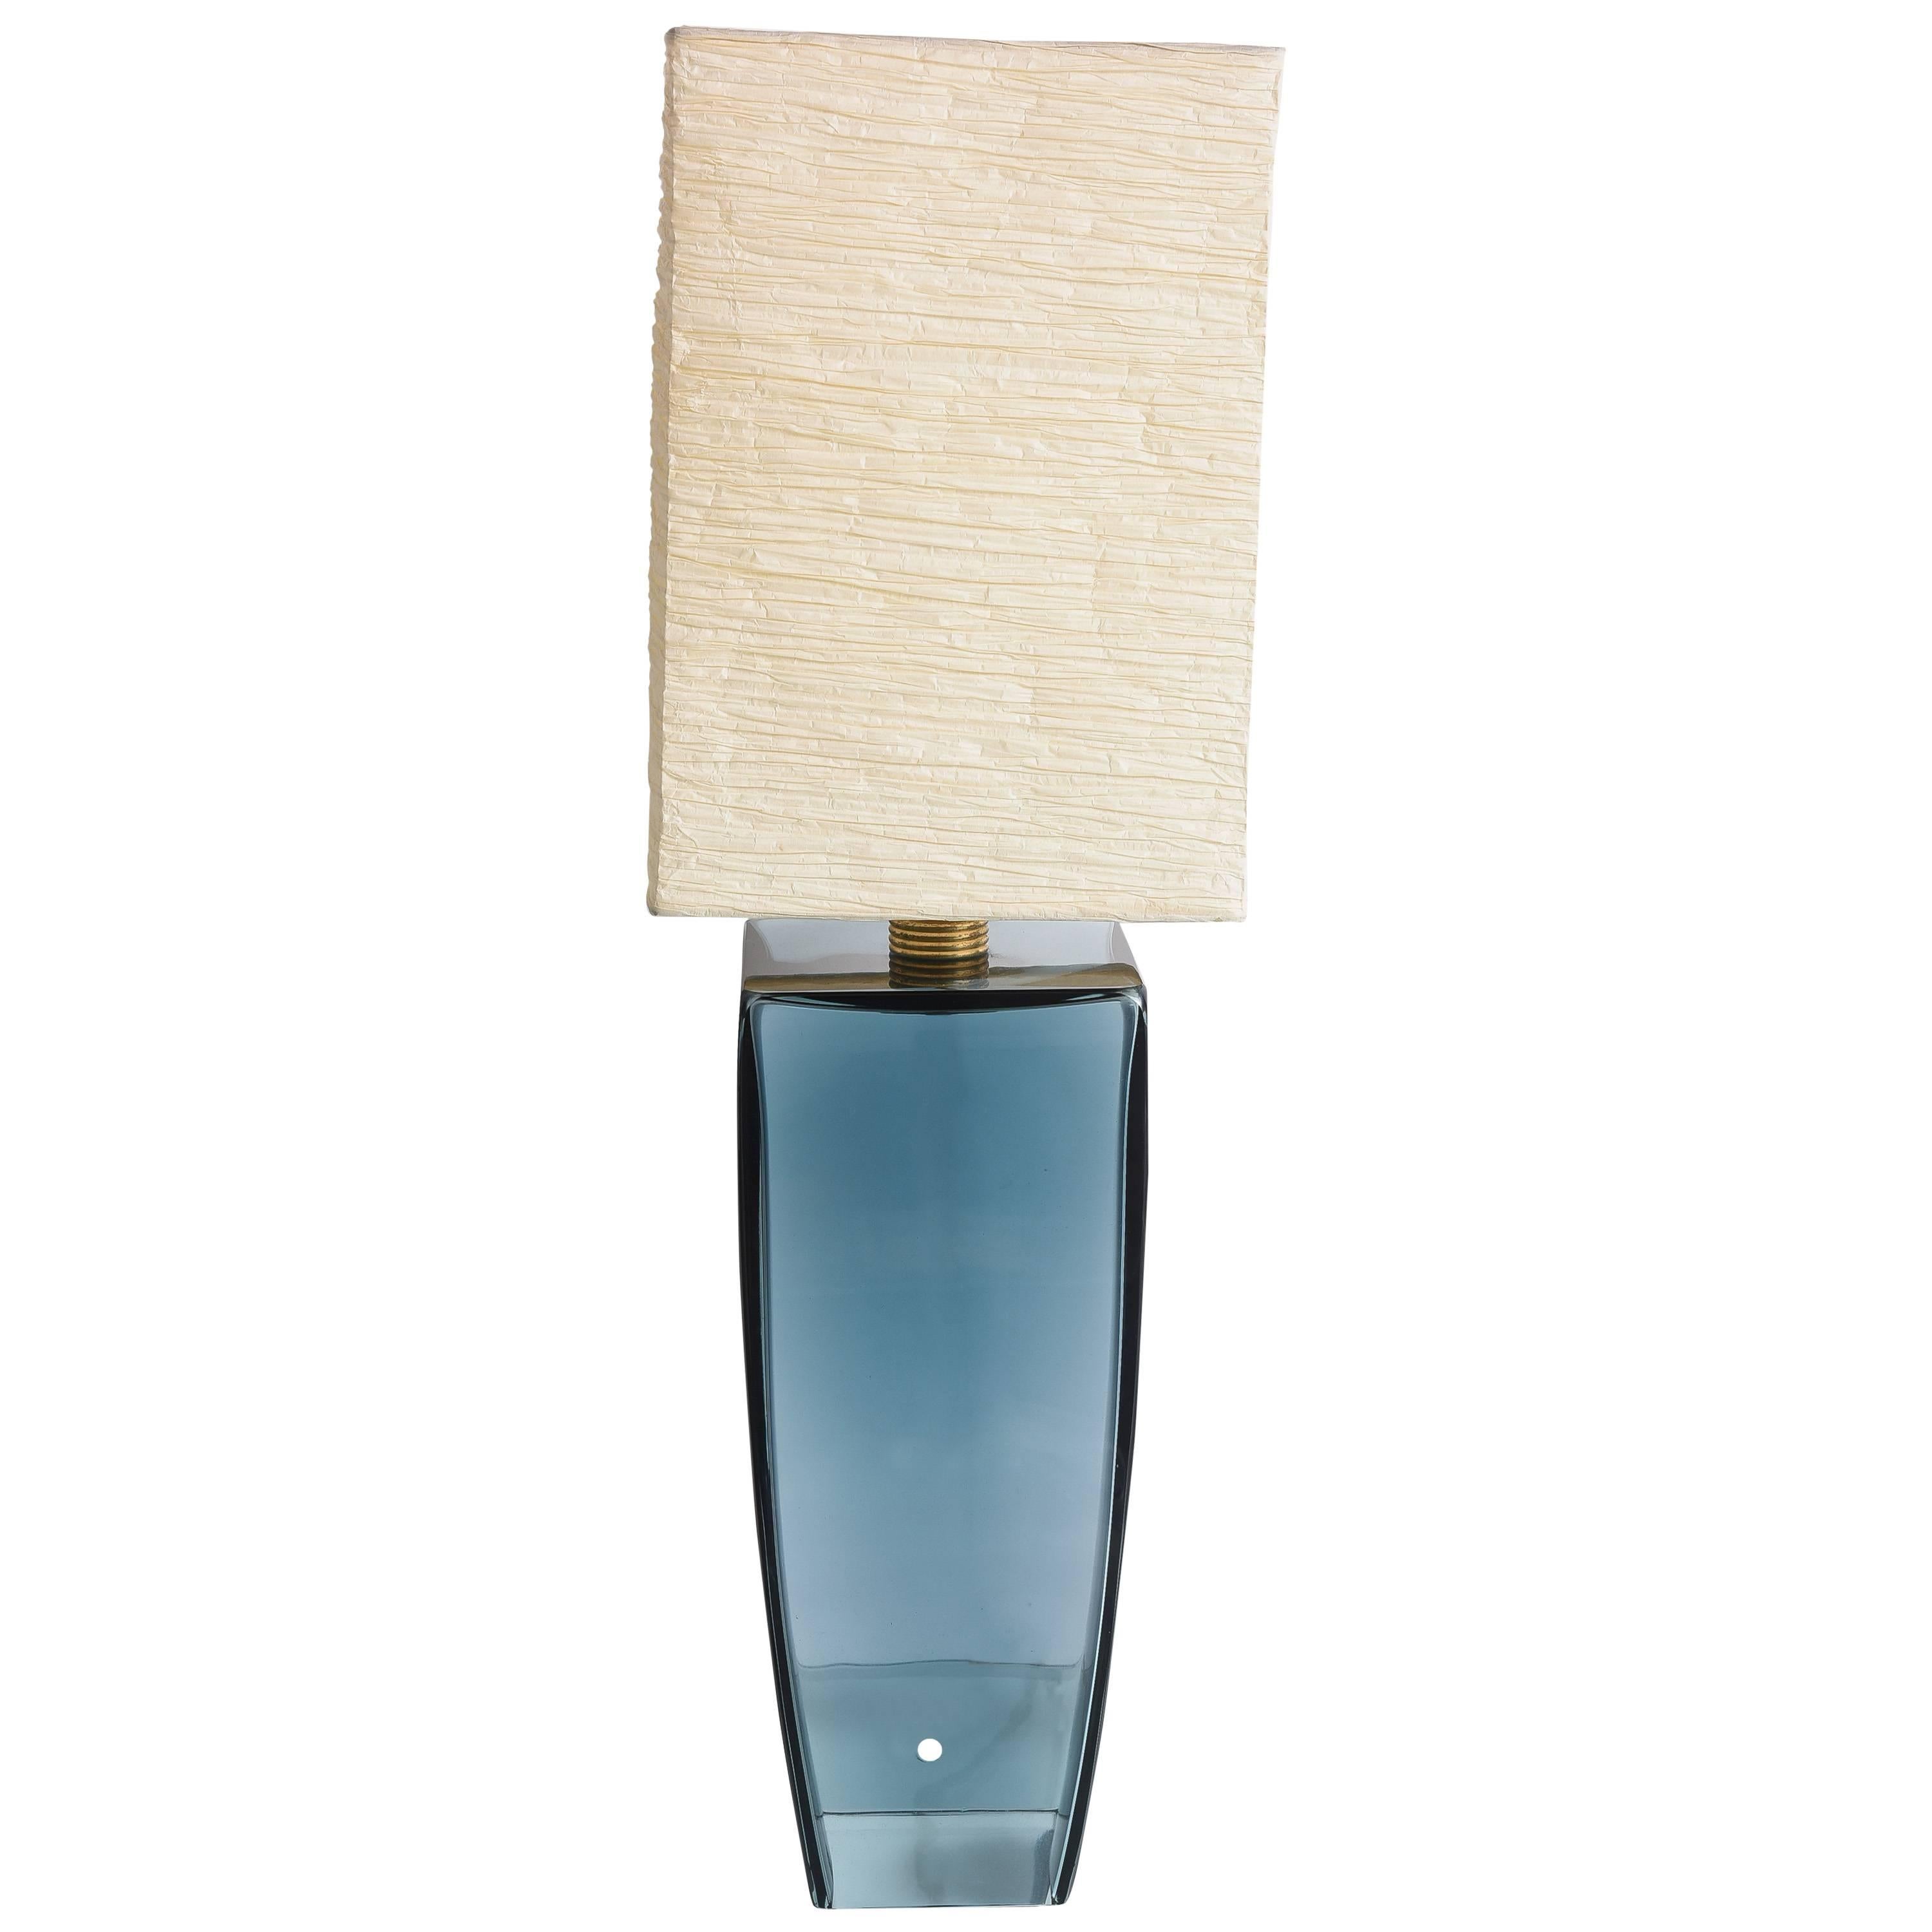 SALE! SALE! AZUL BLUE  1Murano single production  "Artisan"  table lamp